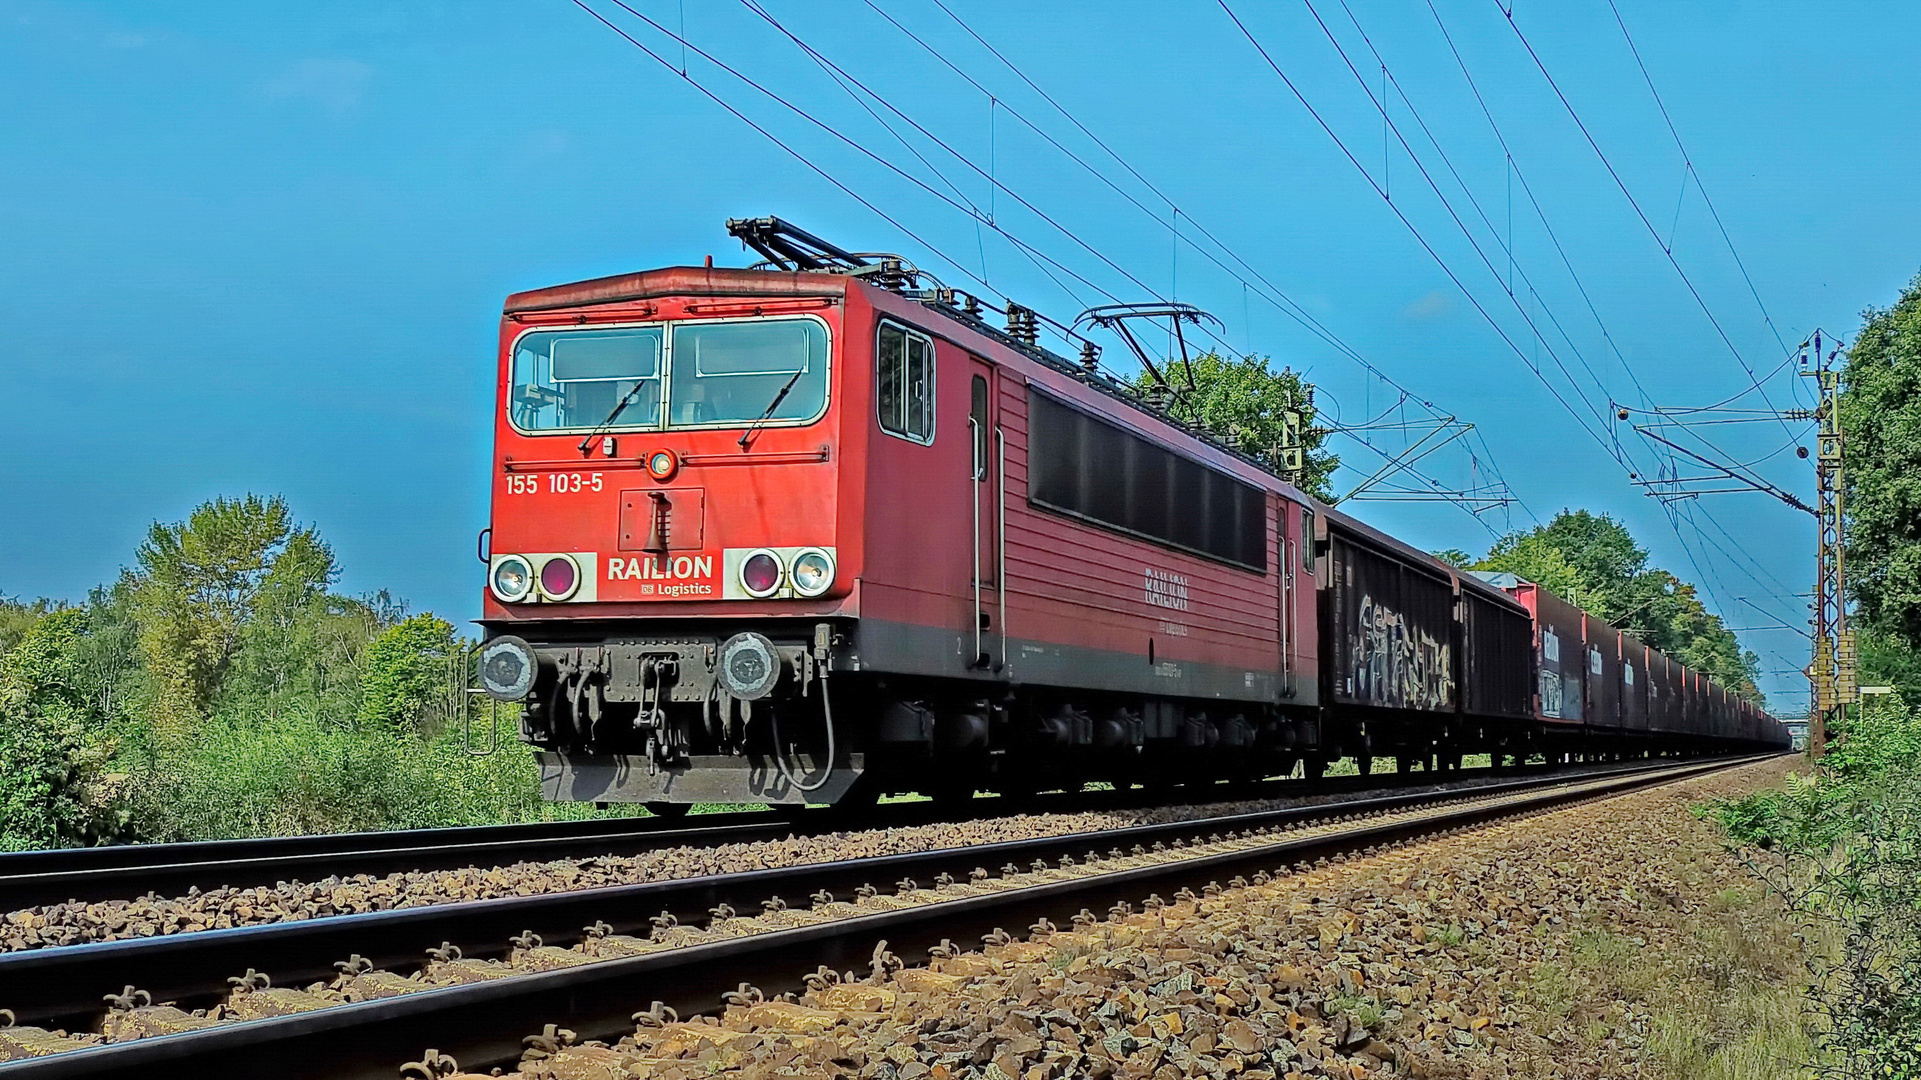 155 103-5 Railion - Gem. Güterzug